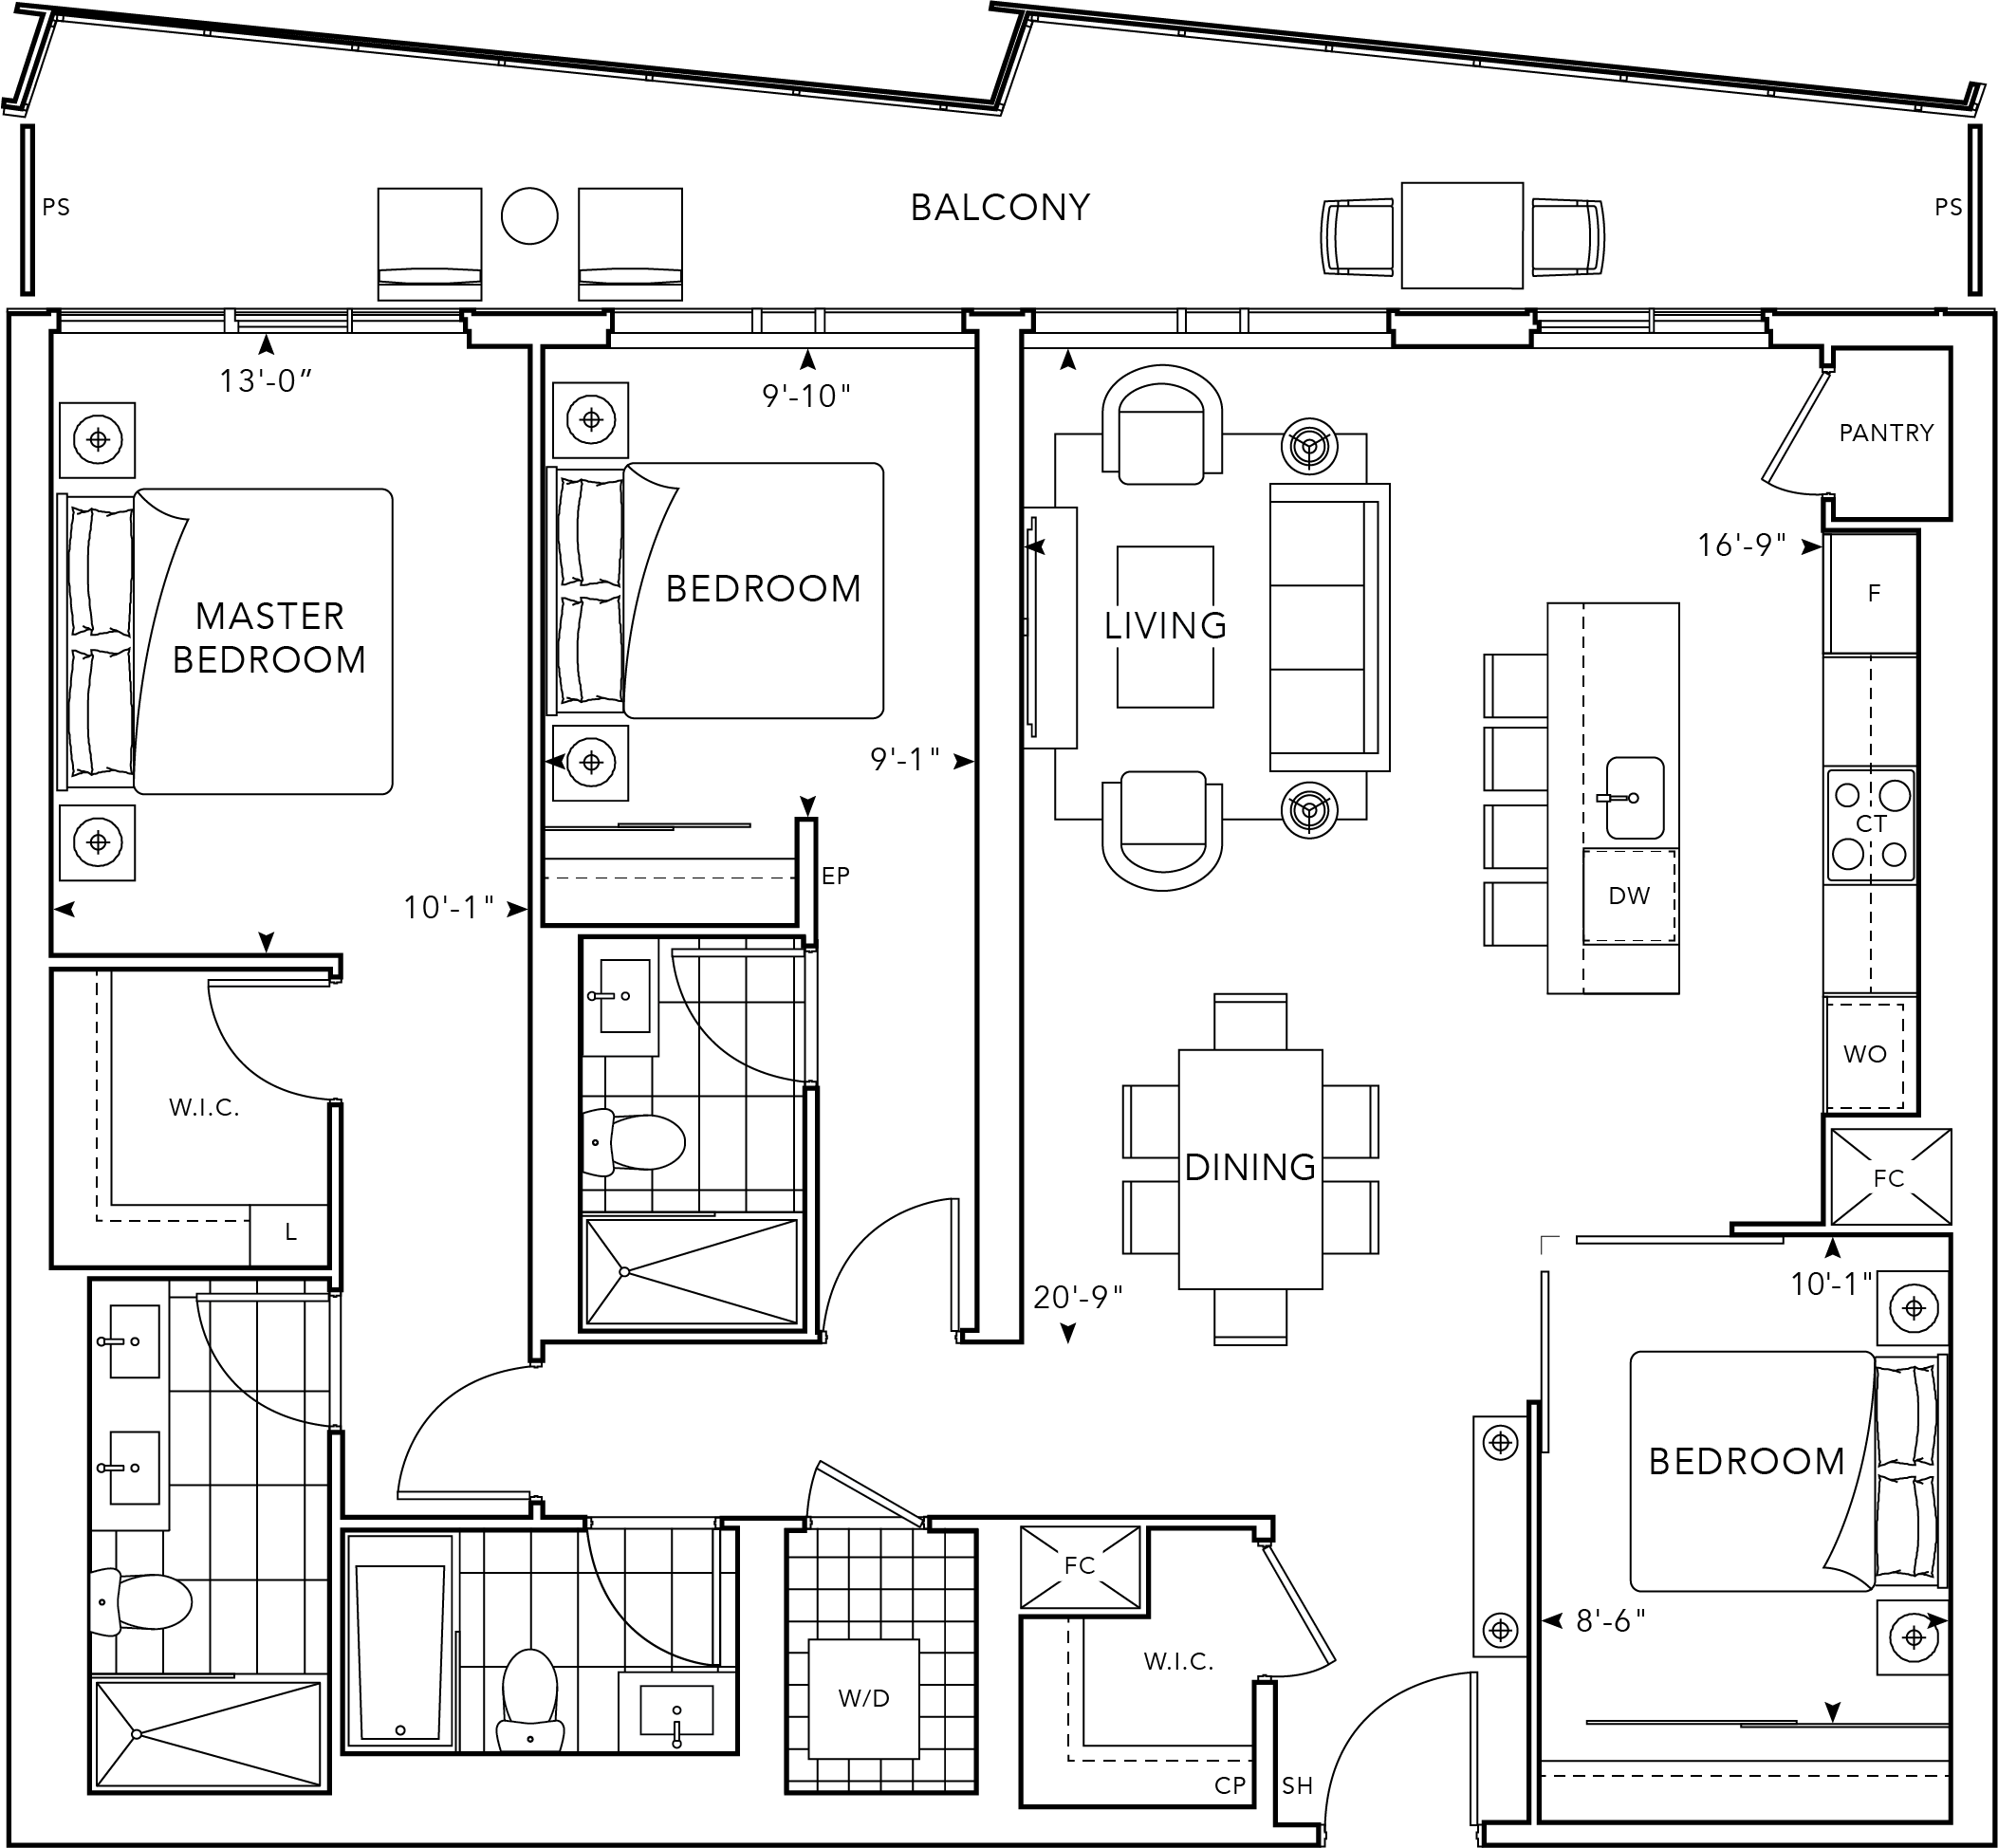 The Well Condo Suite Classic - 3C1 floor plan